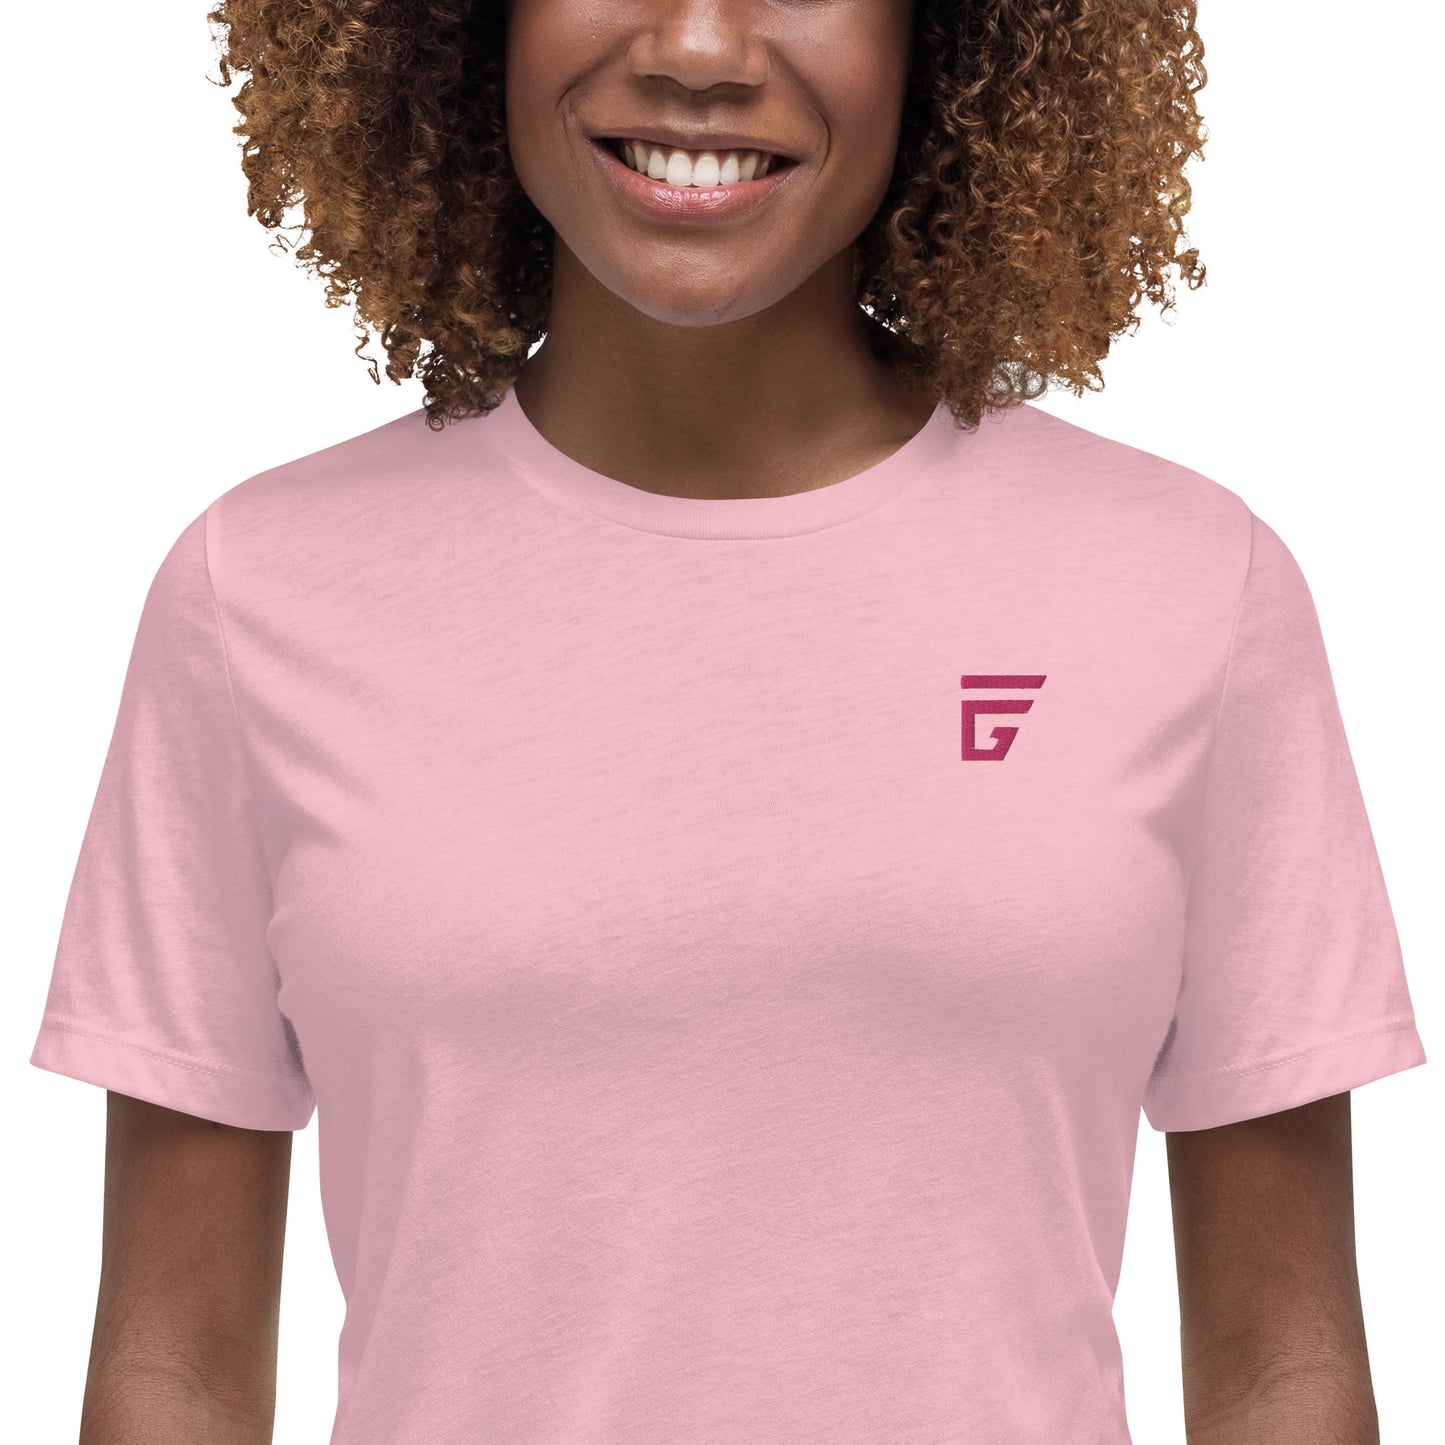 G-FORCE APPAREL Standard Relaxed T-Shirt